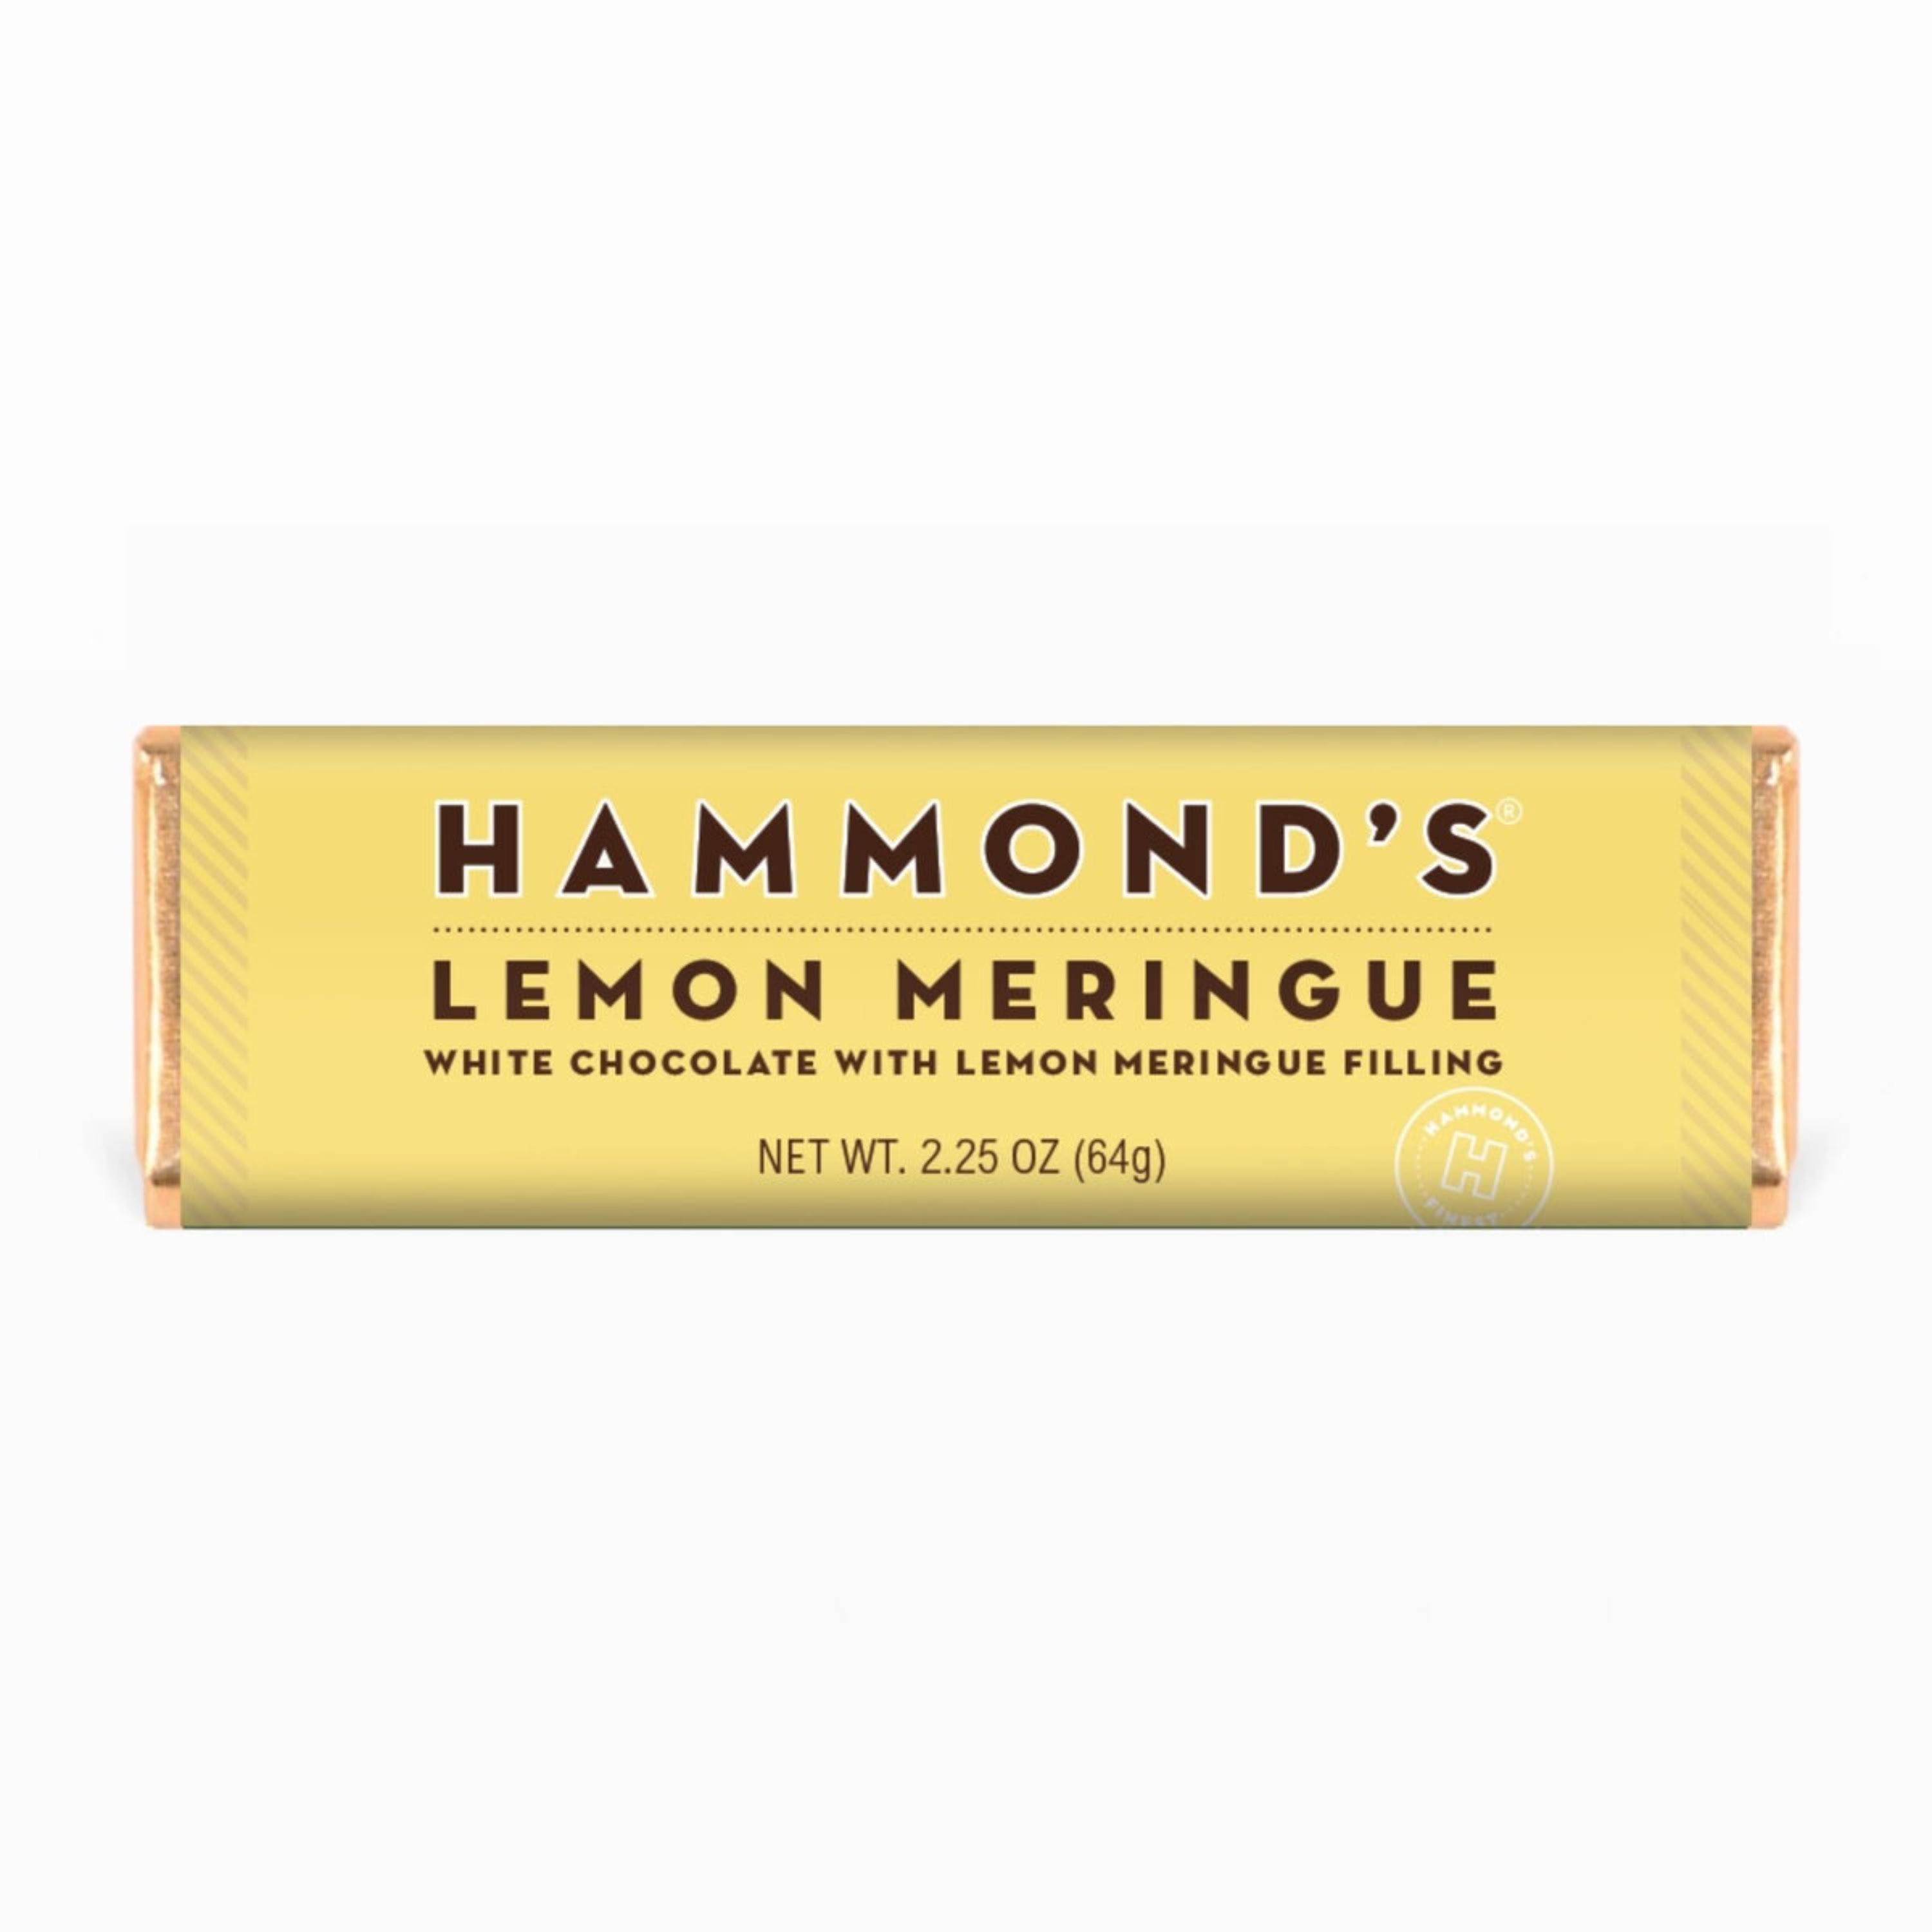 Hammond's Lemon Meringue White Chocolate Bar (64g)